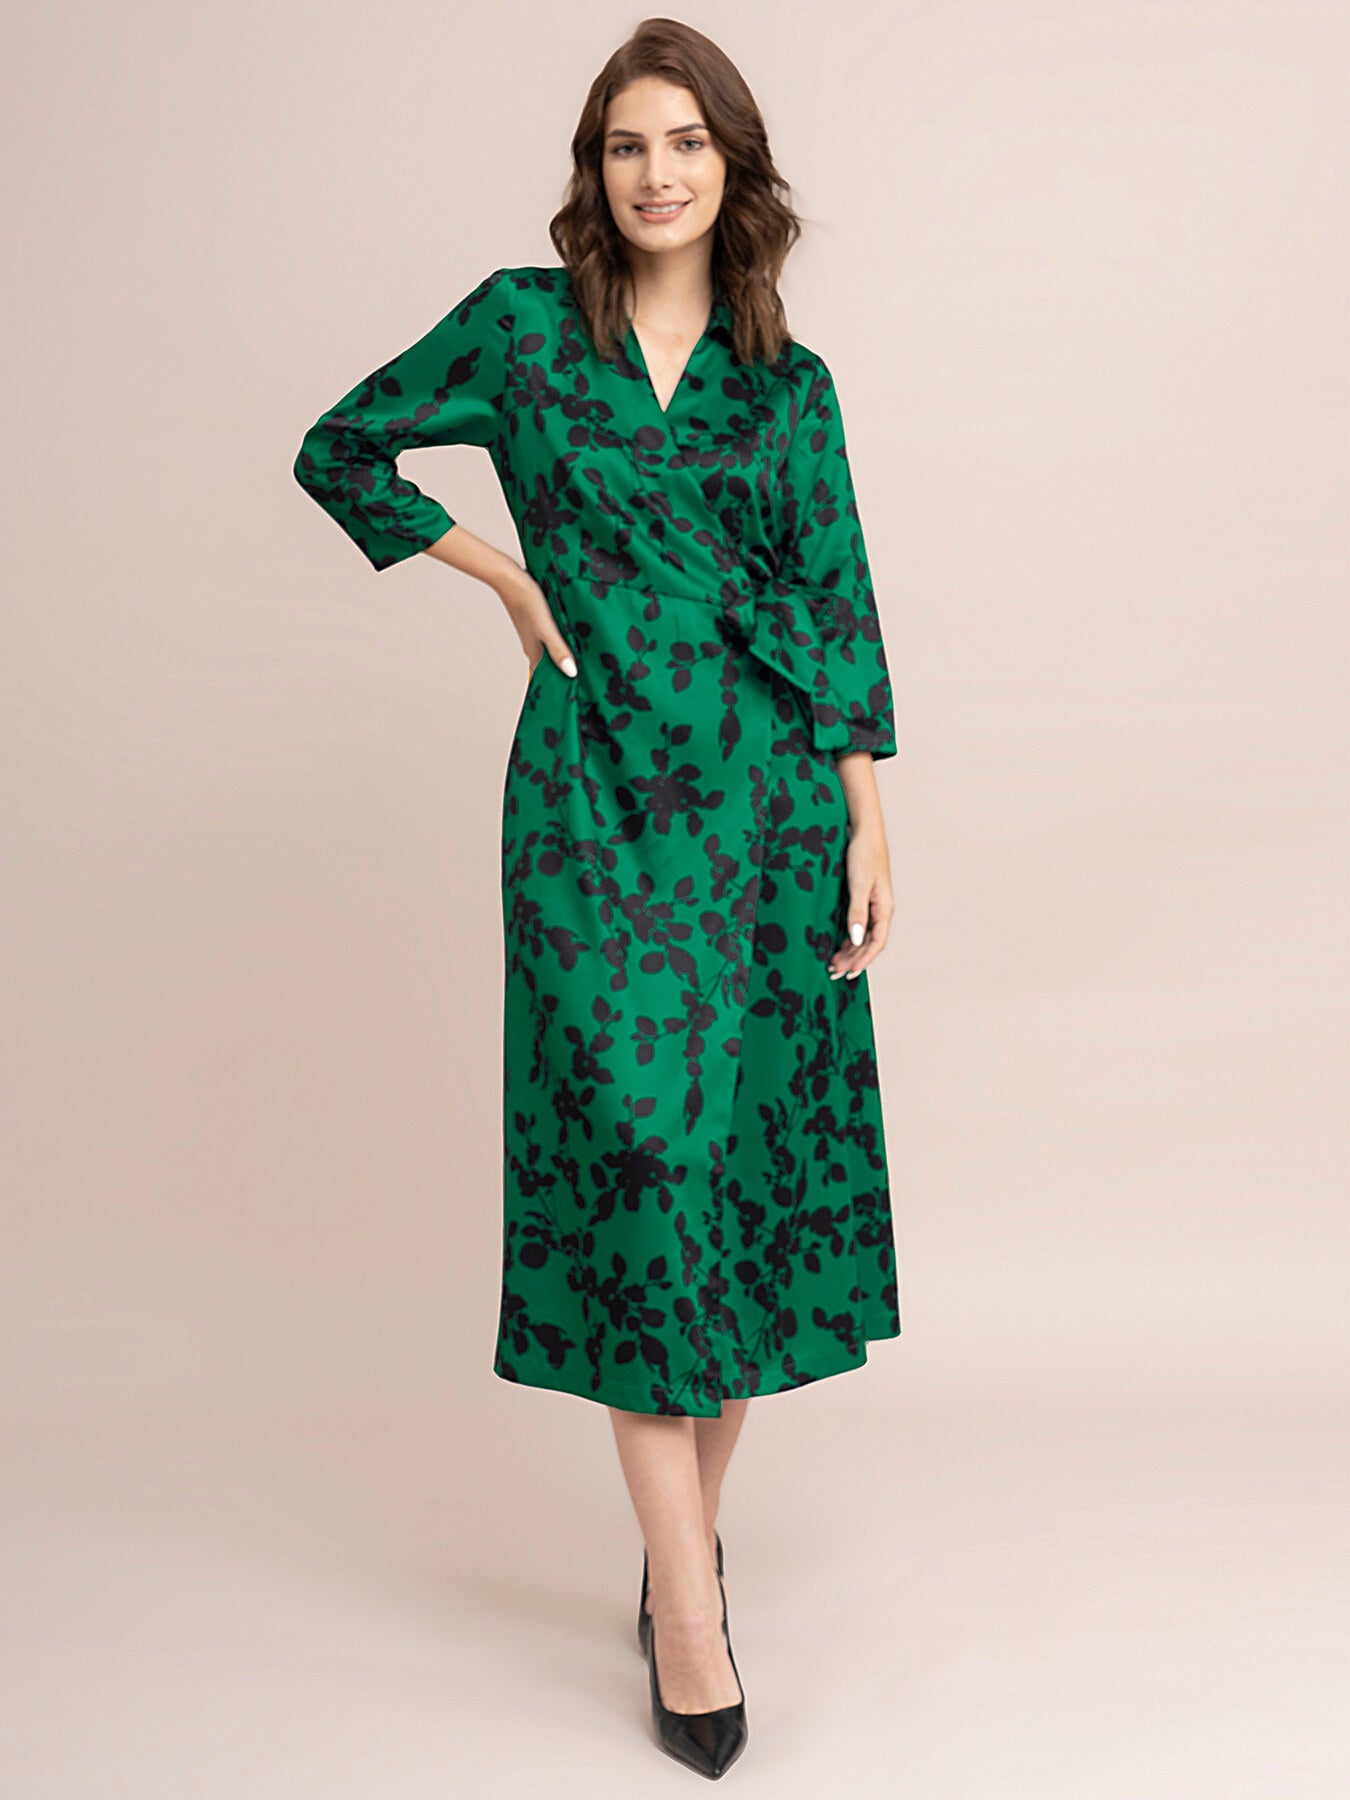 Satin Floral Print Wrap Dress - Green And Black